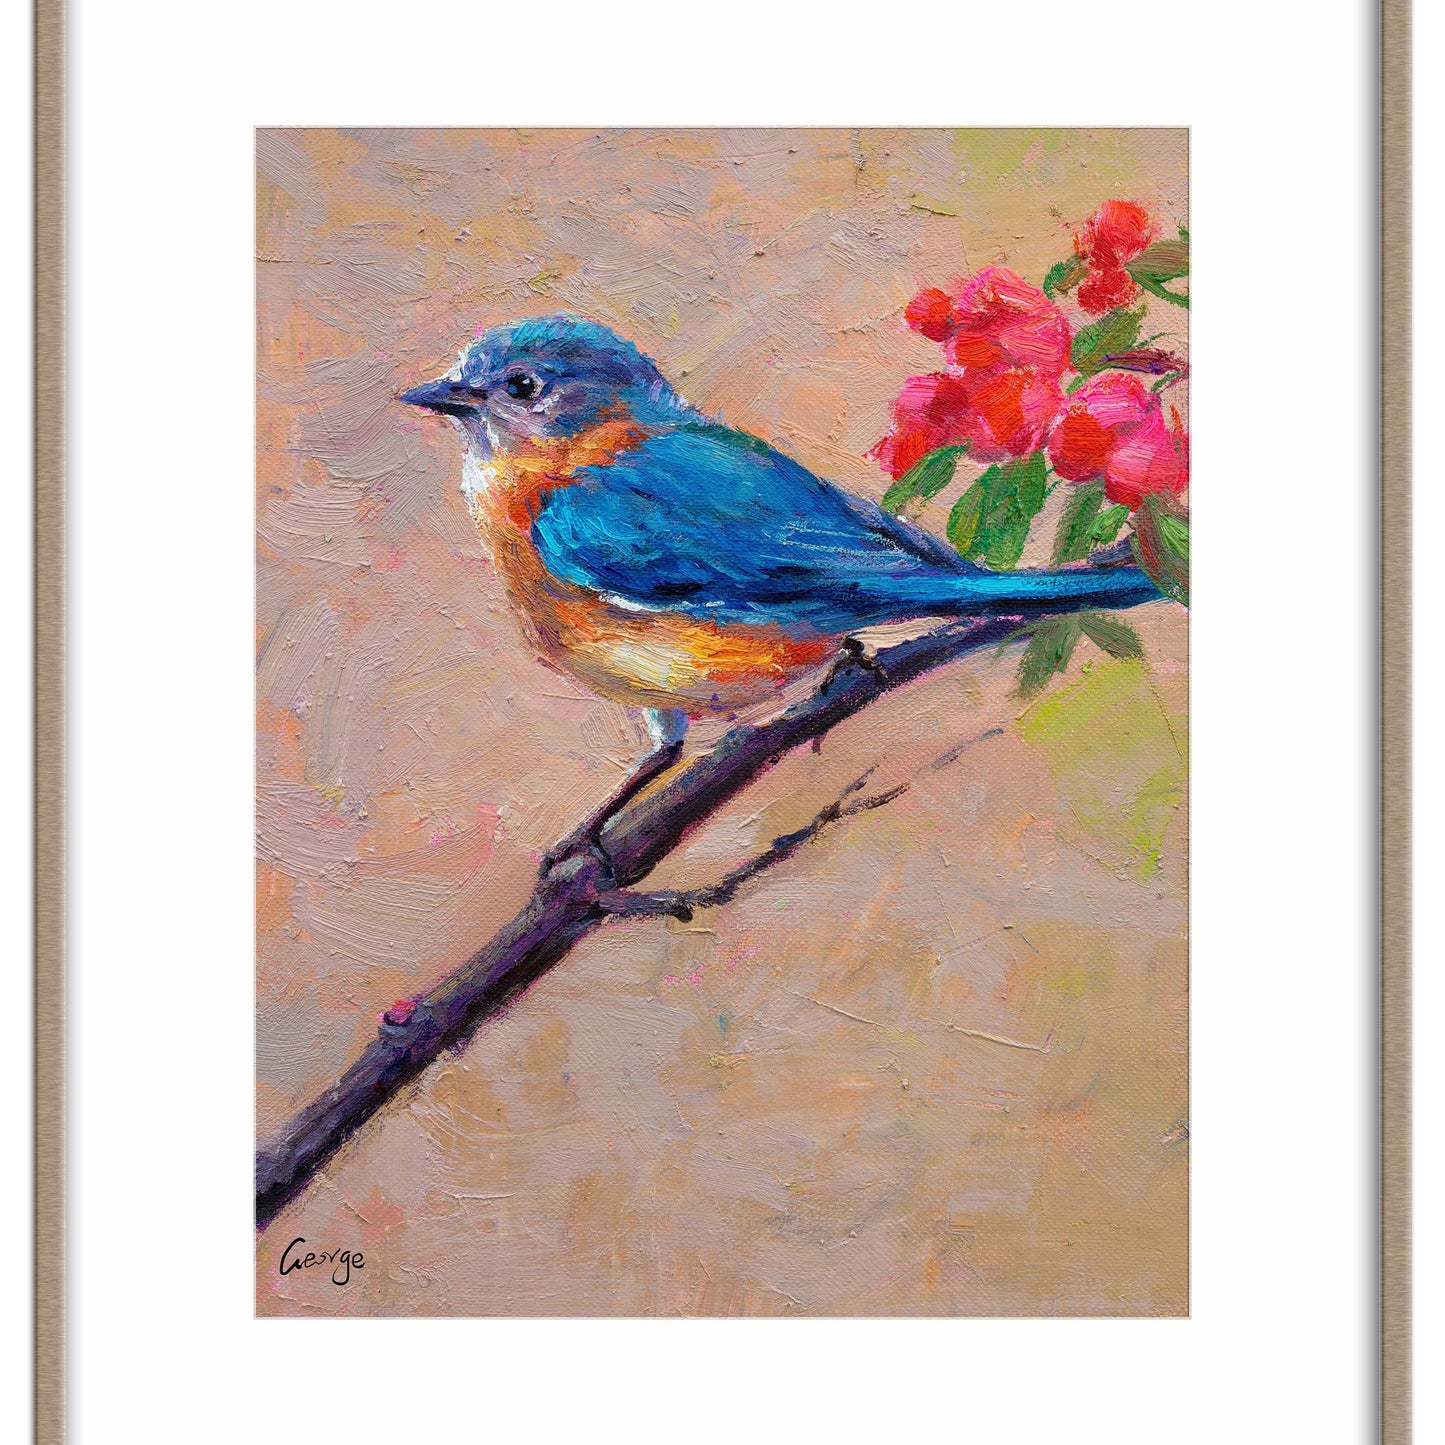 Small Oil Painting Blue Bird, Abstract Canvas Art, Contemporary Art, Bird Artwork, Bedroom Wall Decor, Wall Art Canvas Original Oil Painting